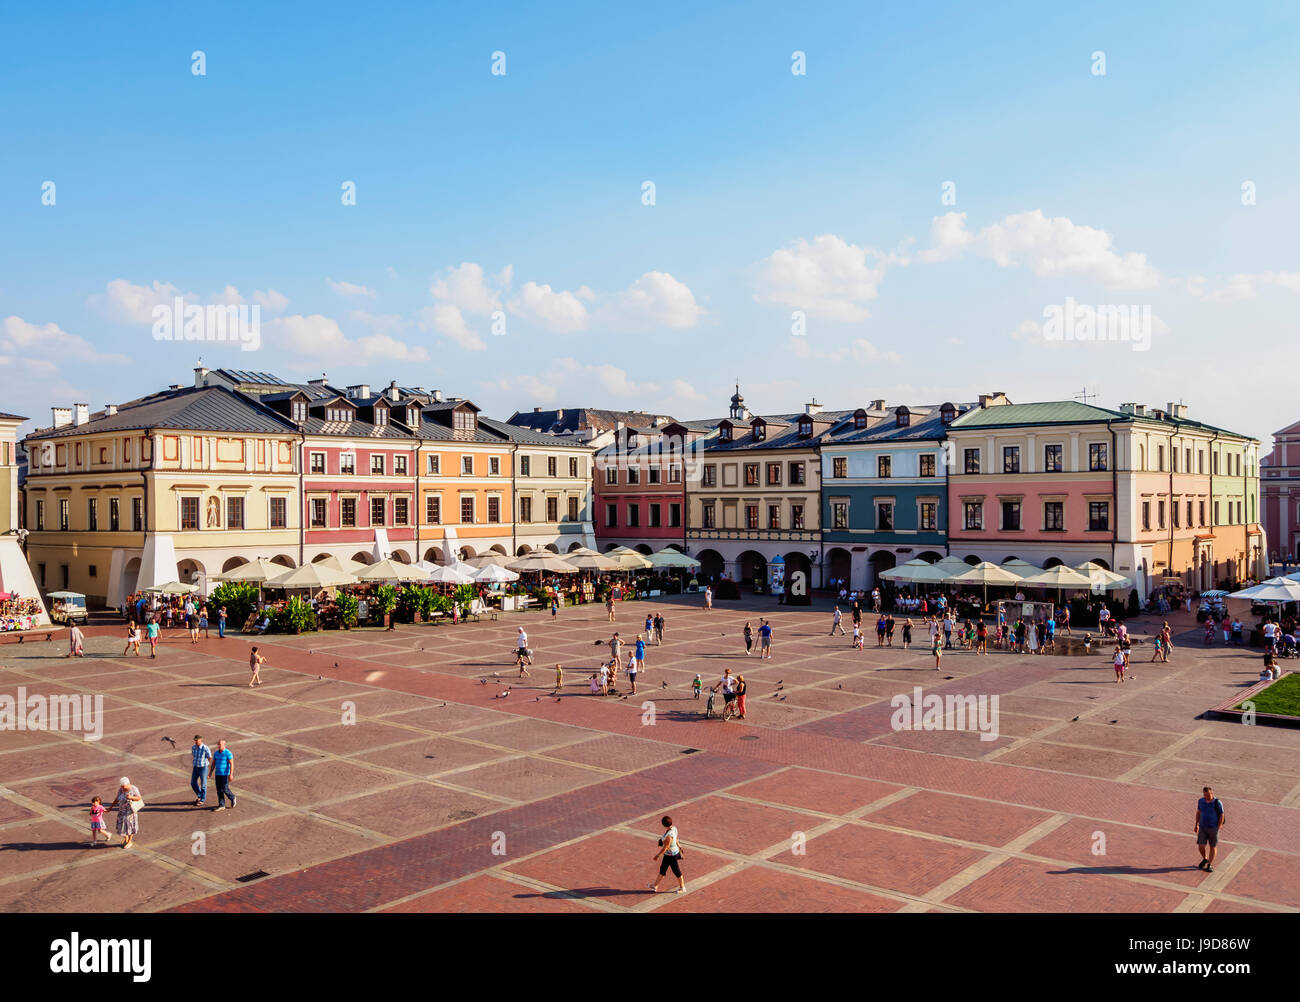 Bunte Häuser am Marktplatz, Altstadt, UNESCO-Weltkulturerbe, Zamosc, Woiwodschaft Lublin, Polen, Europa Stockfoto